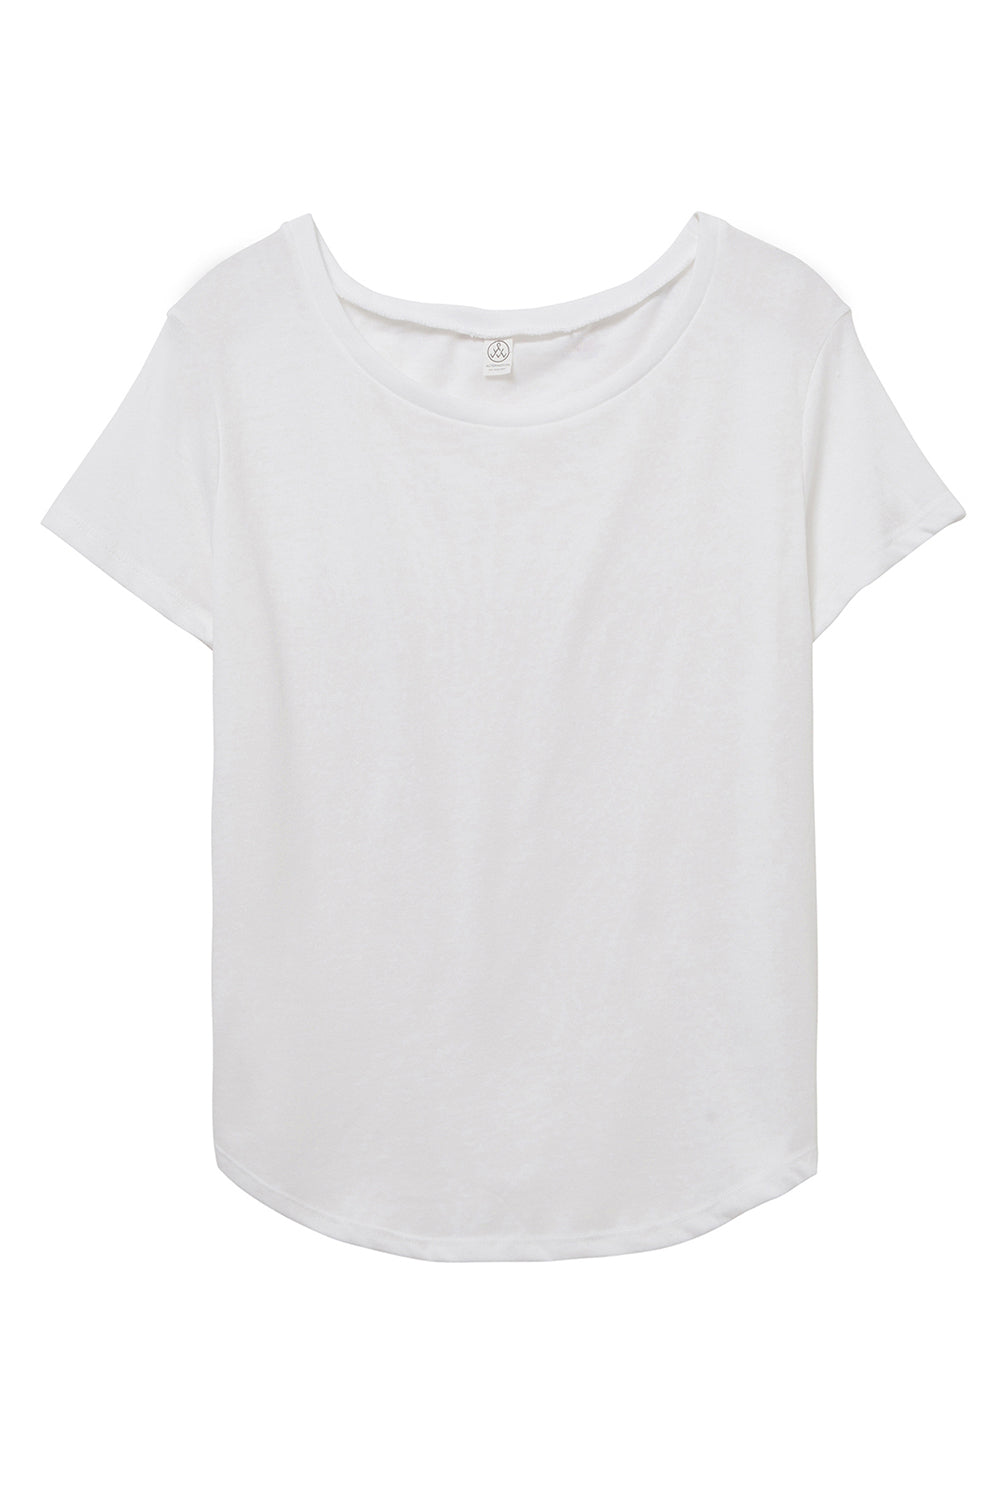 Alternative AA5064/5064BP Womens Backstage Vintage Short Sleeve Crewneck T-Shirt White Flat Front